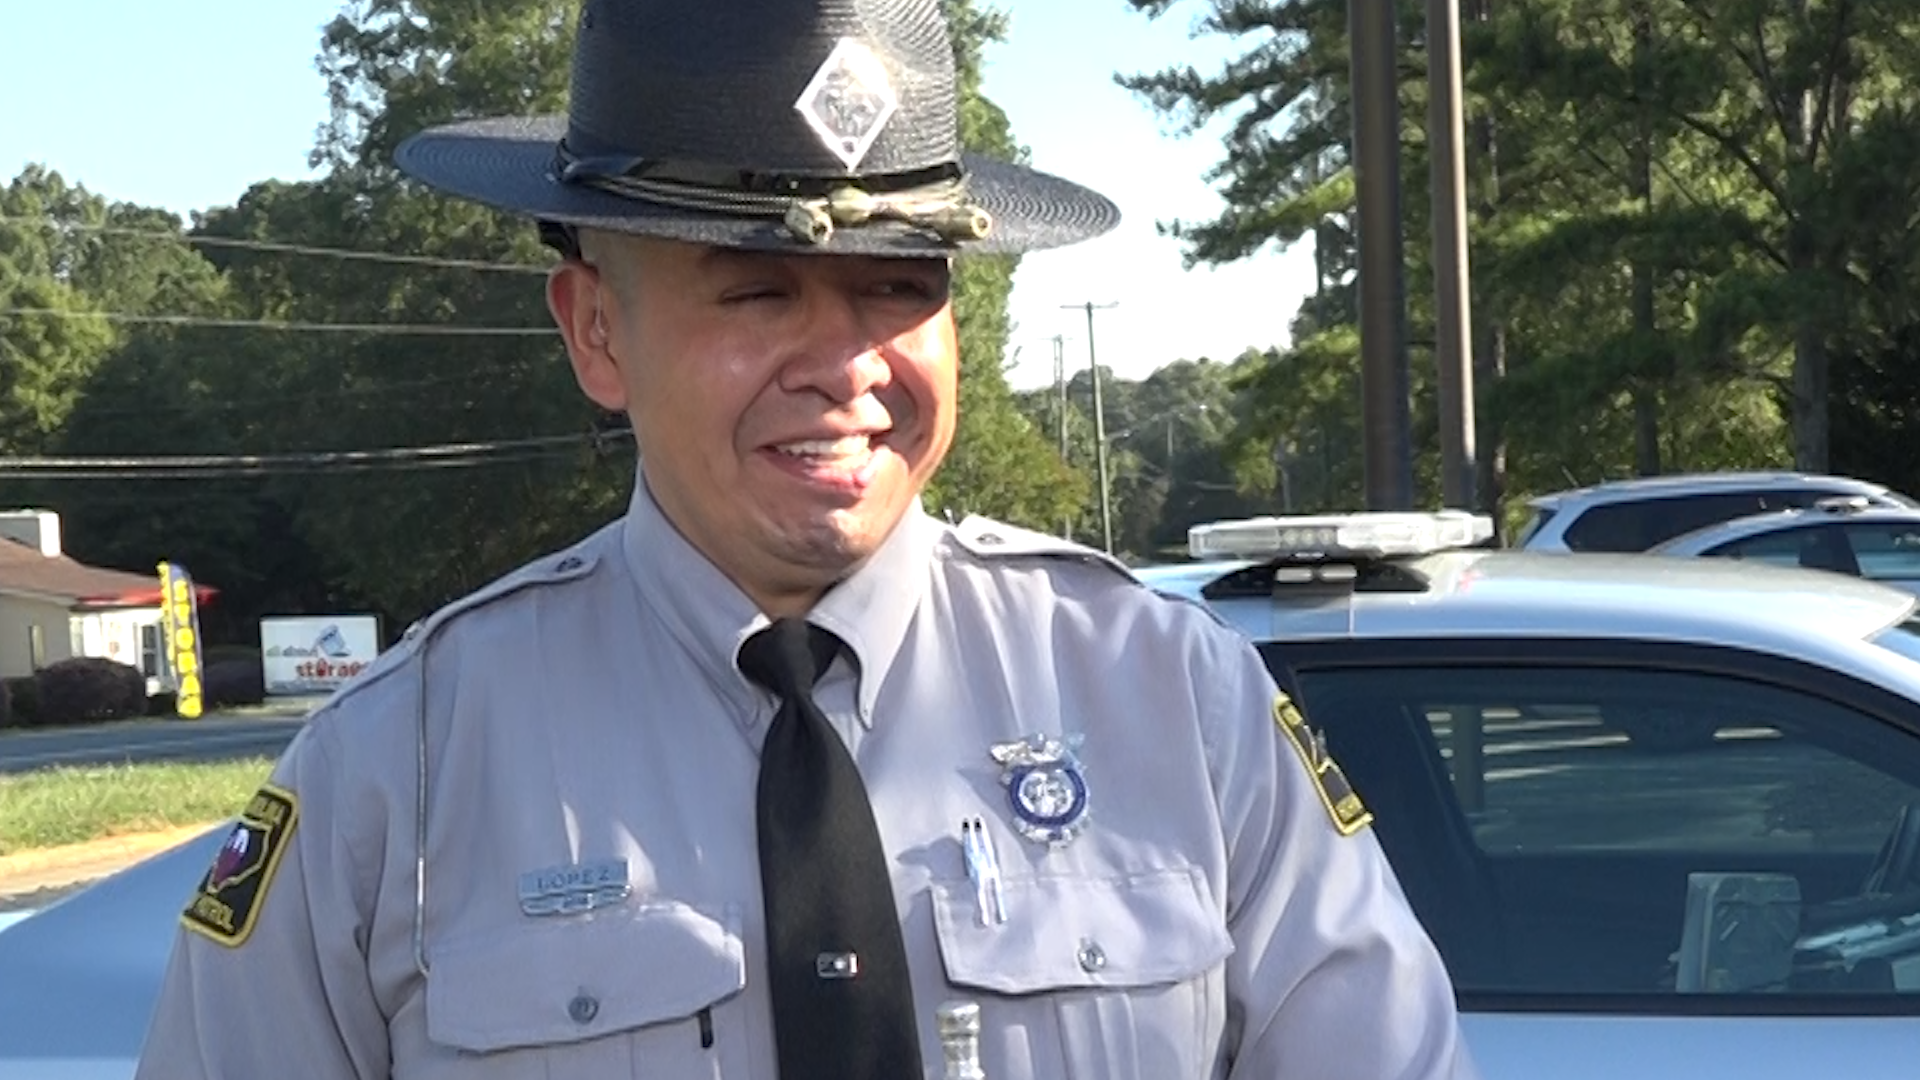 North Carolina State Highway Patrol Trooper Adolfo Lopez returned to work Monday 14 months after being injured in Charlotte.